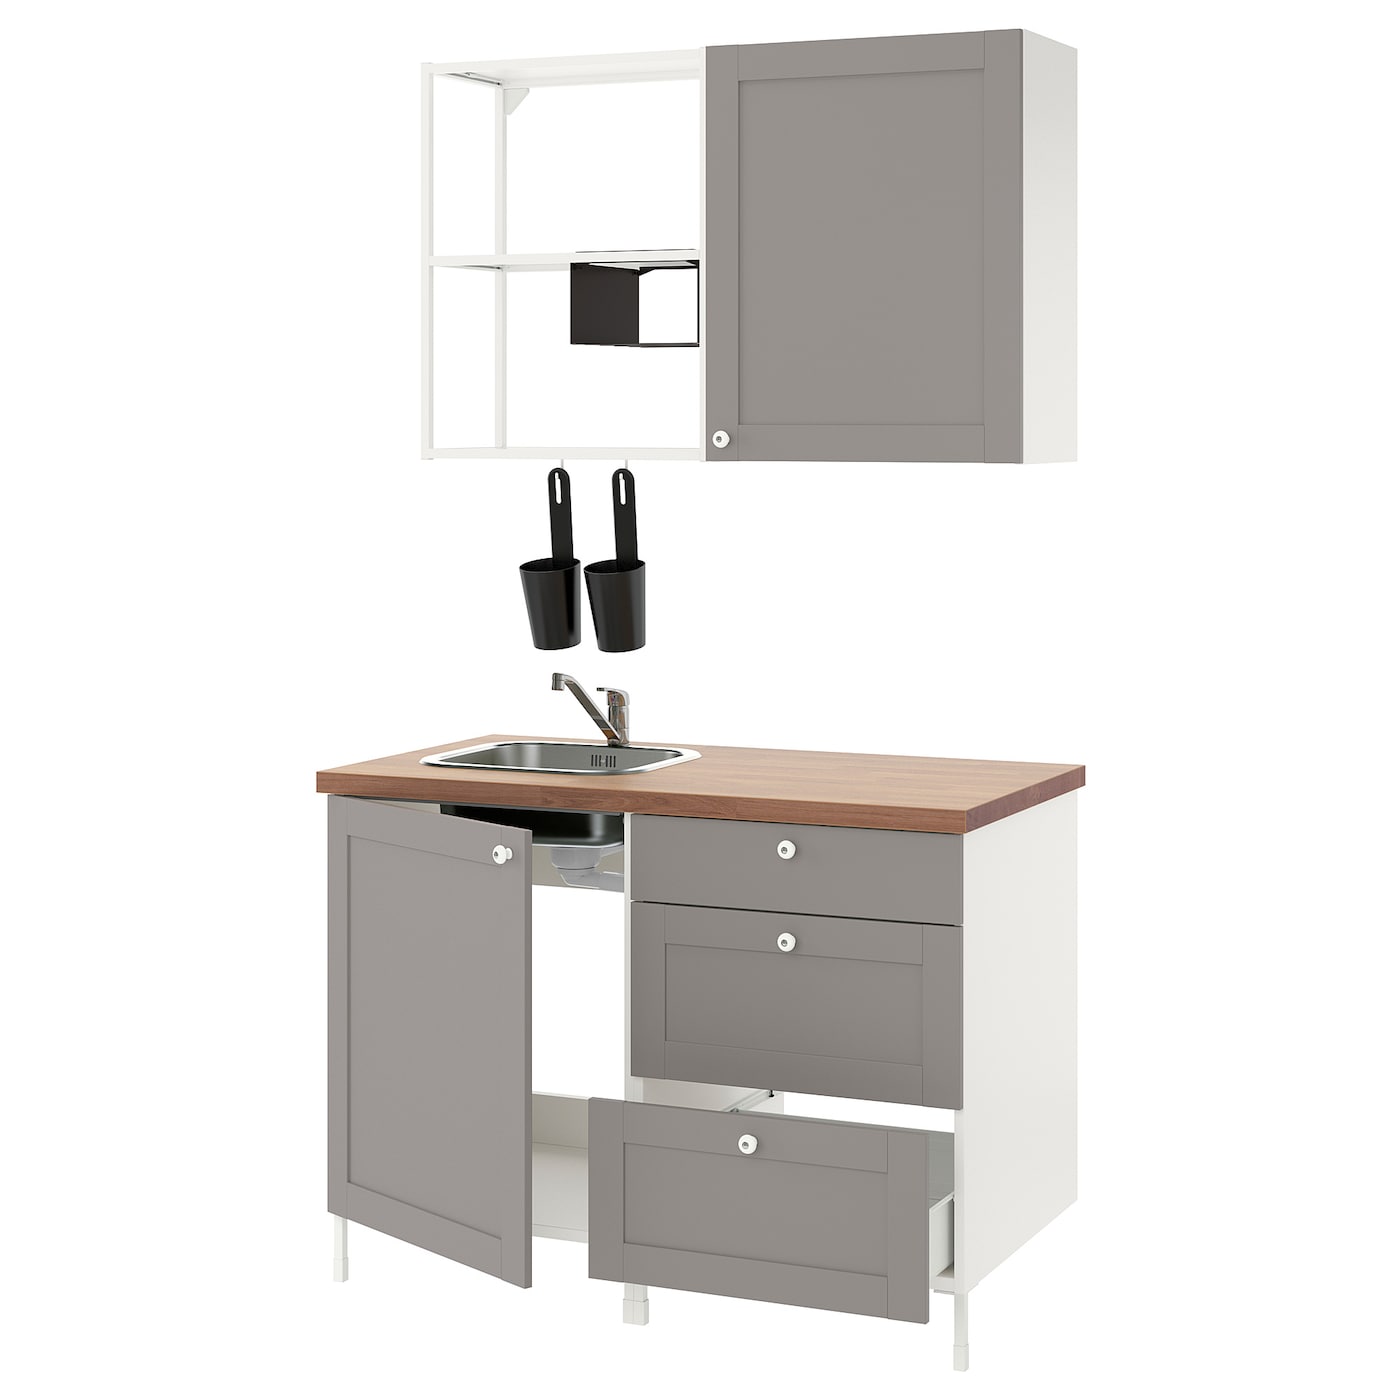 Кухонная комбинация для хранения вещей - ENHET  IKEA/ ЭНХЕТ ИКЕА, 123х63,5х222 см, белый/серый/бежевый